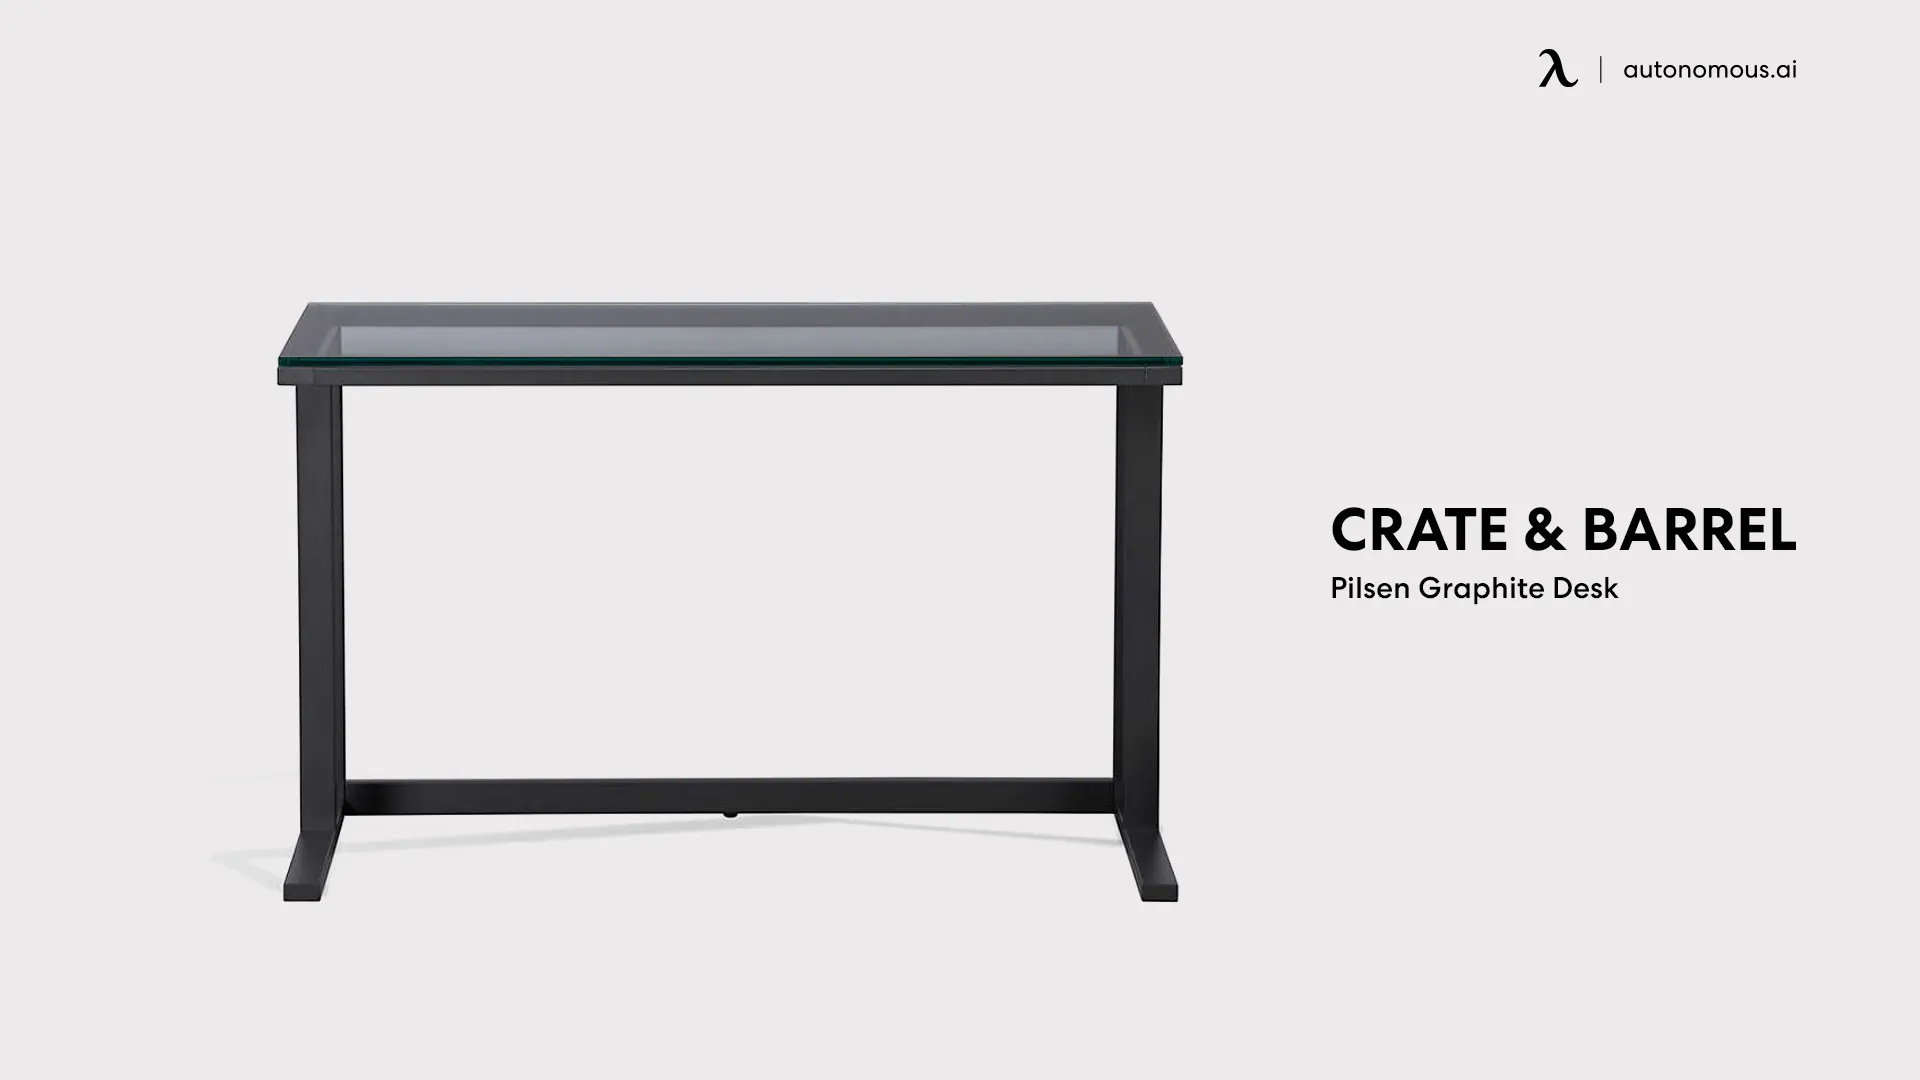 Pilsen Graphite Desk (Crate & Barrel)